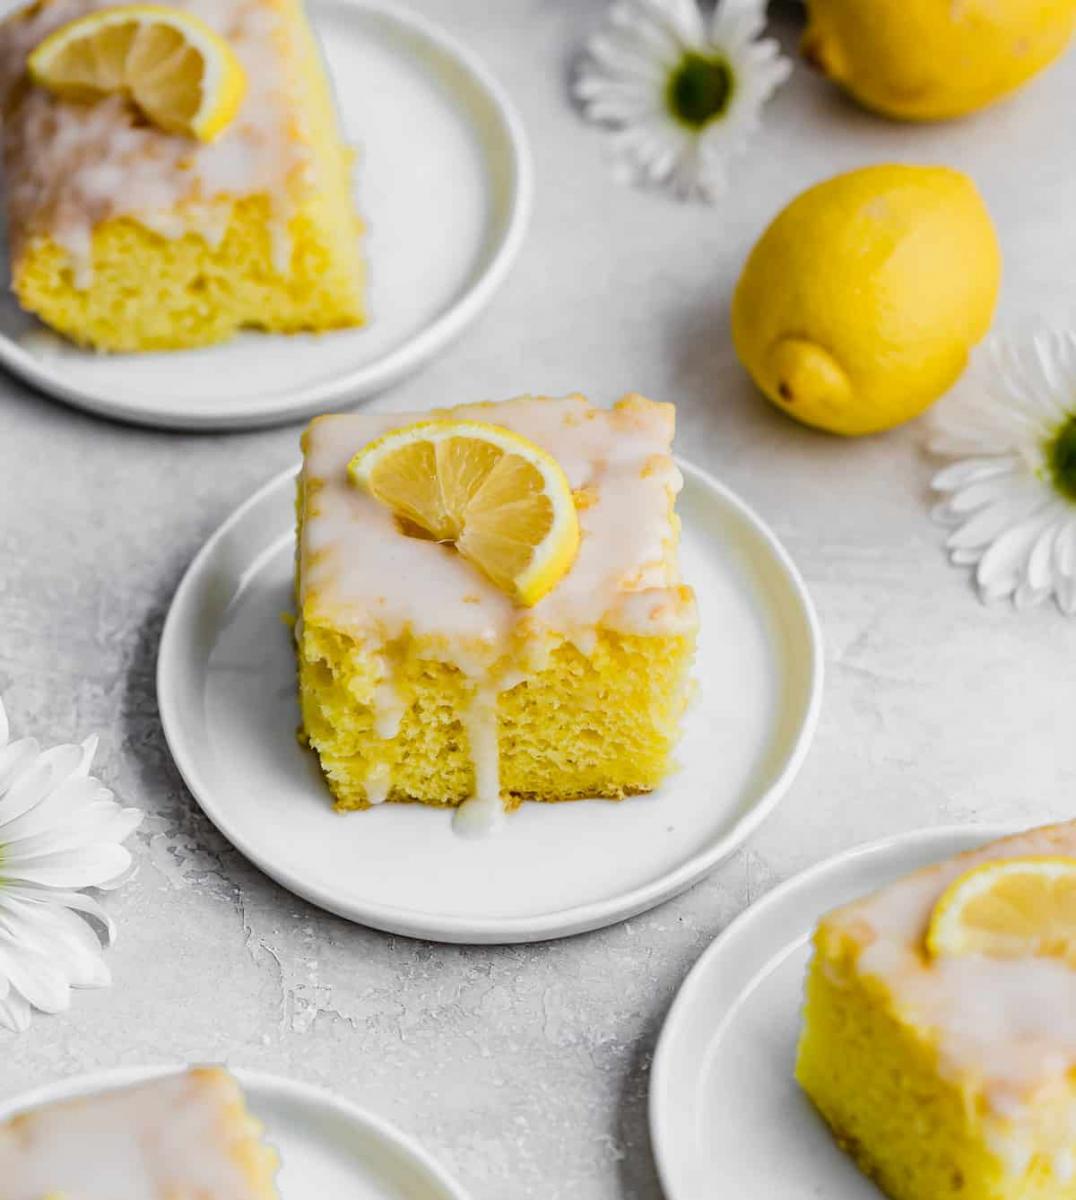 Slices of lemon jello poke cake on white dessert plates, surrounded by white daisies and whole lemons.